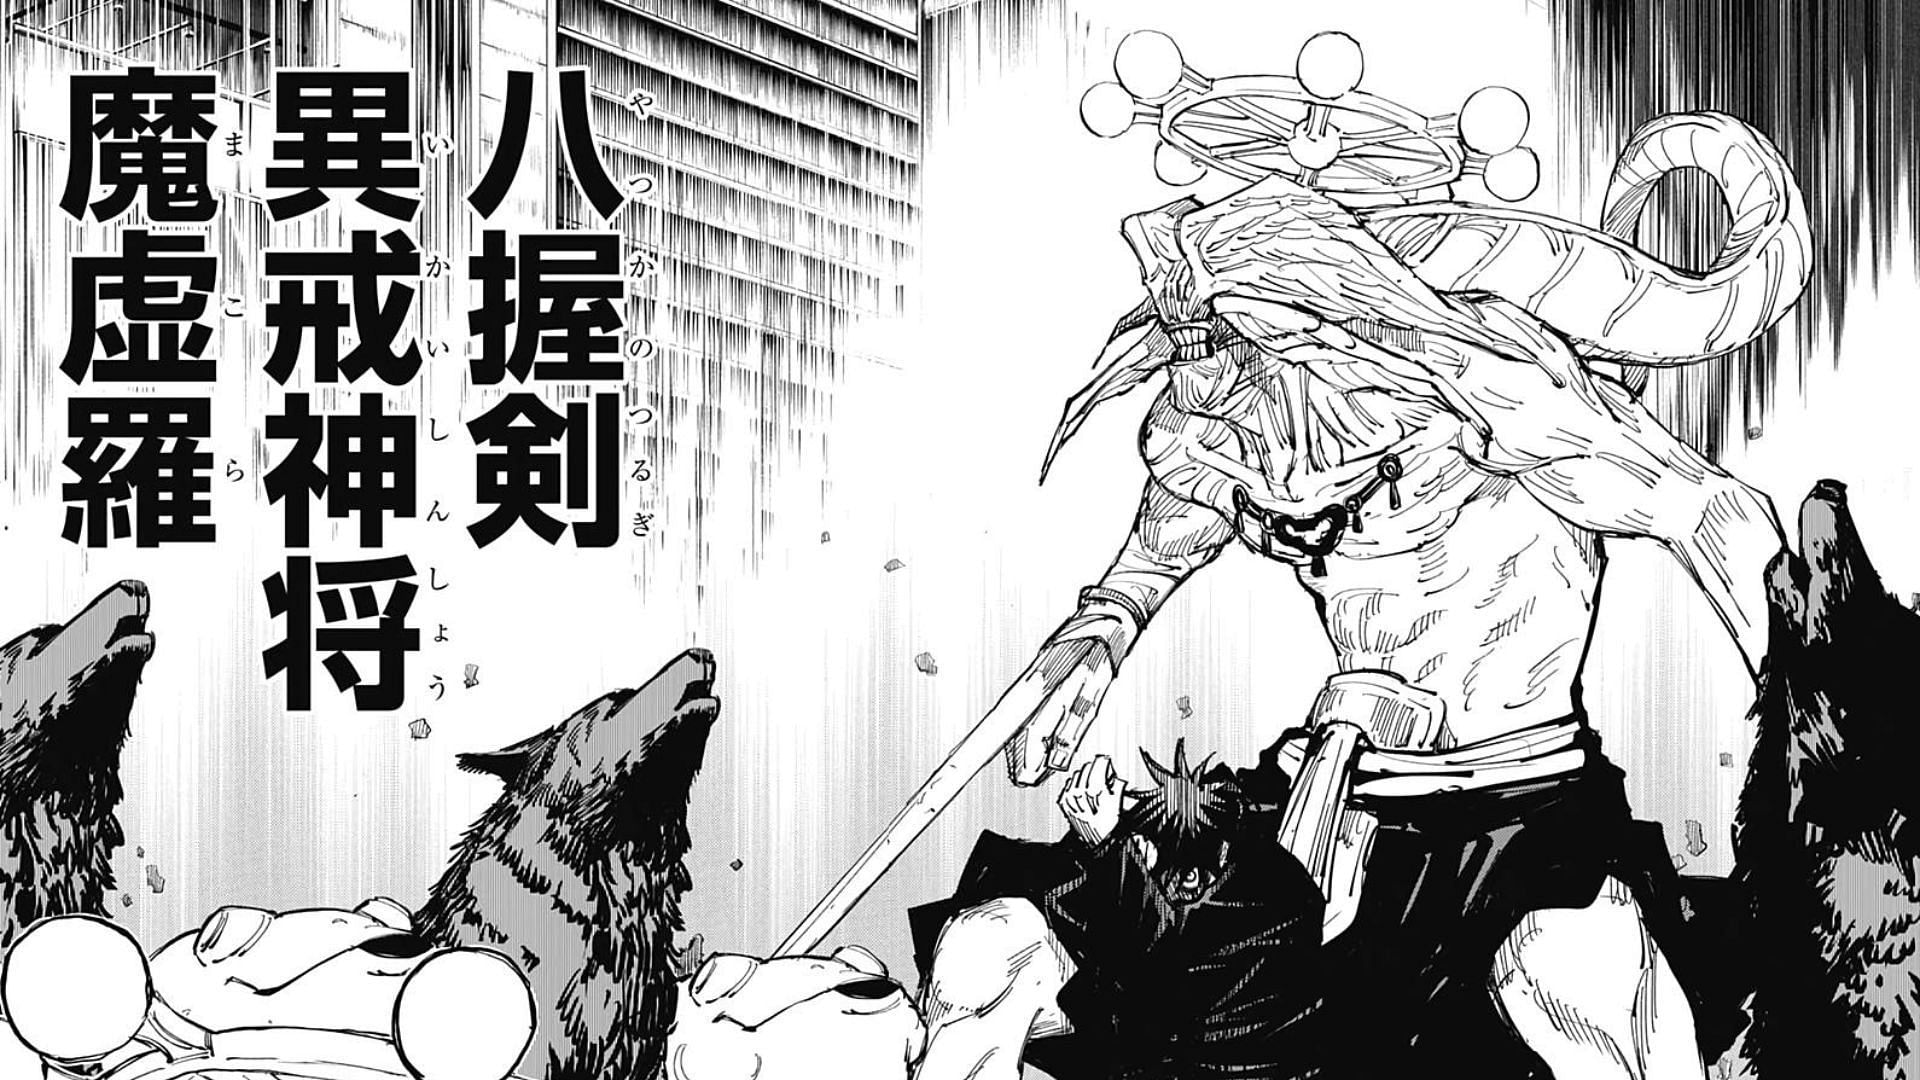 Jujutsu Kaisen chapter 229: Gojo forces Sukuna to unleash Mahoraga after a mortal blow